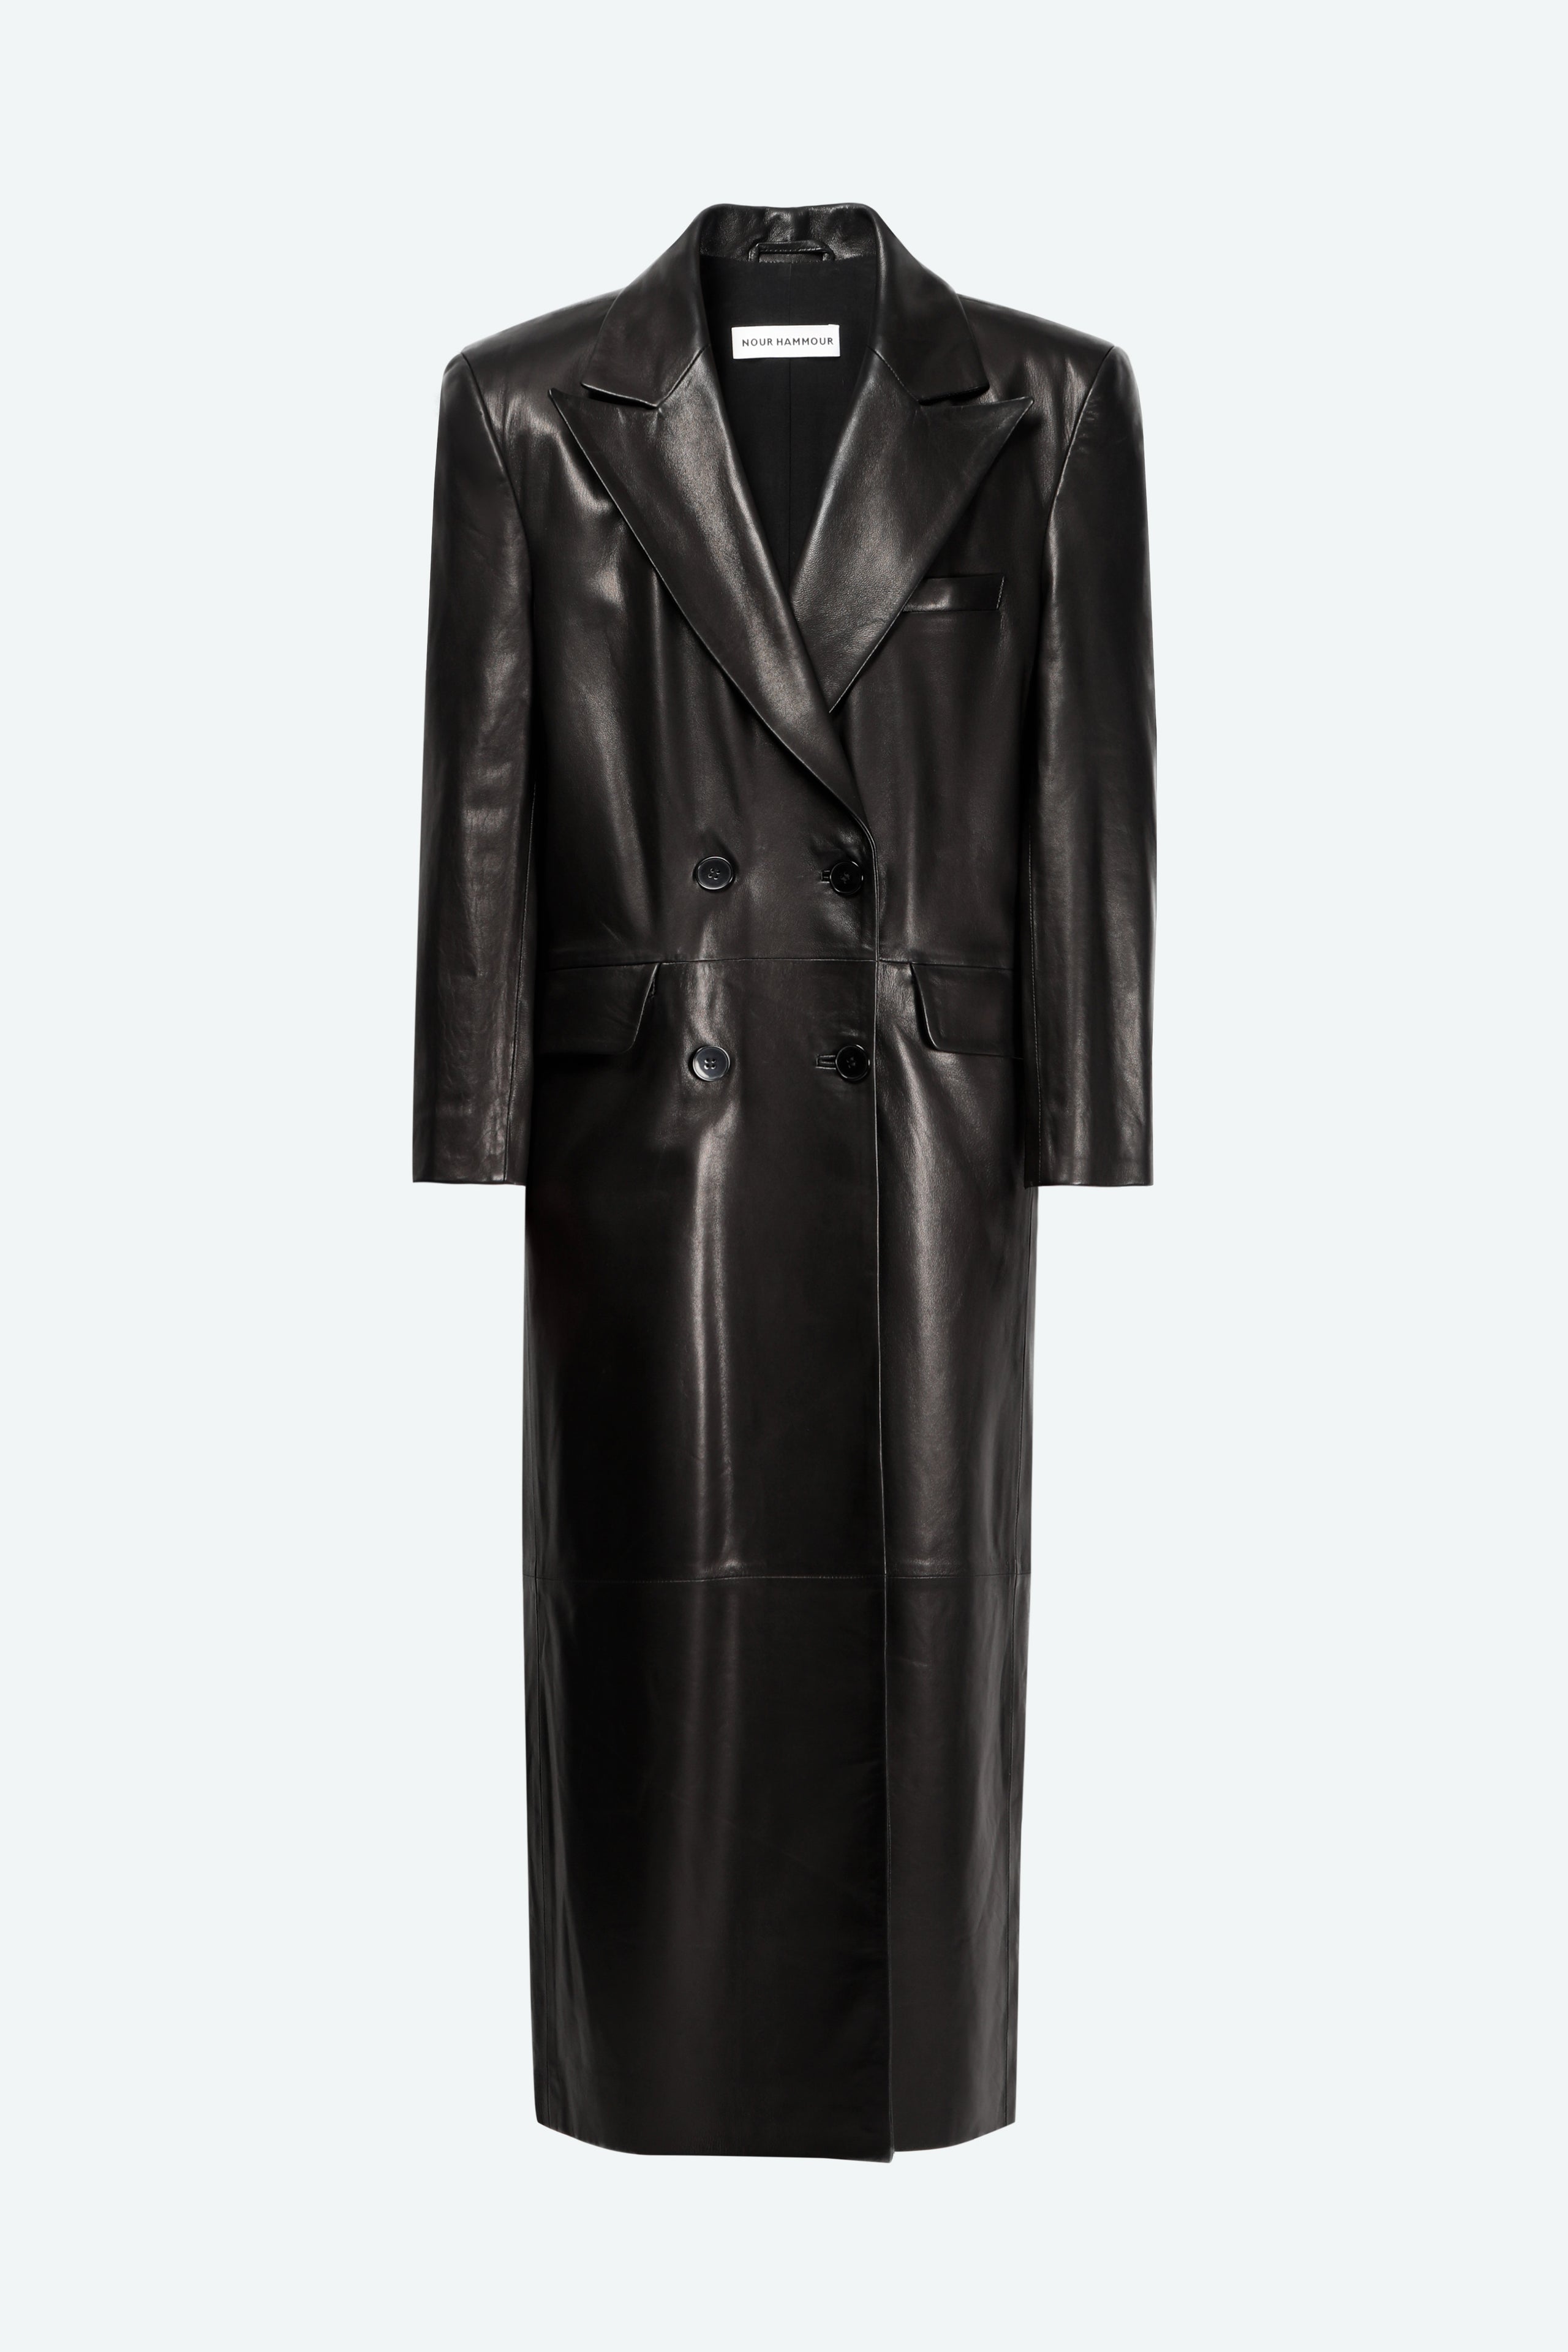 Misha Black Long Leather Coat Packshot